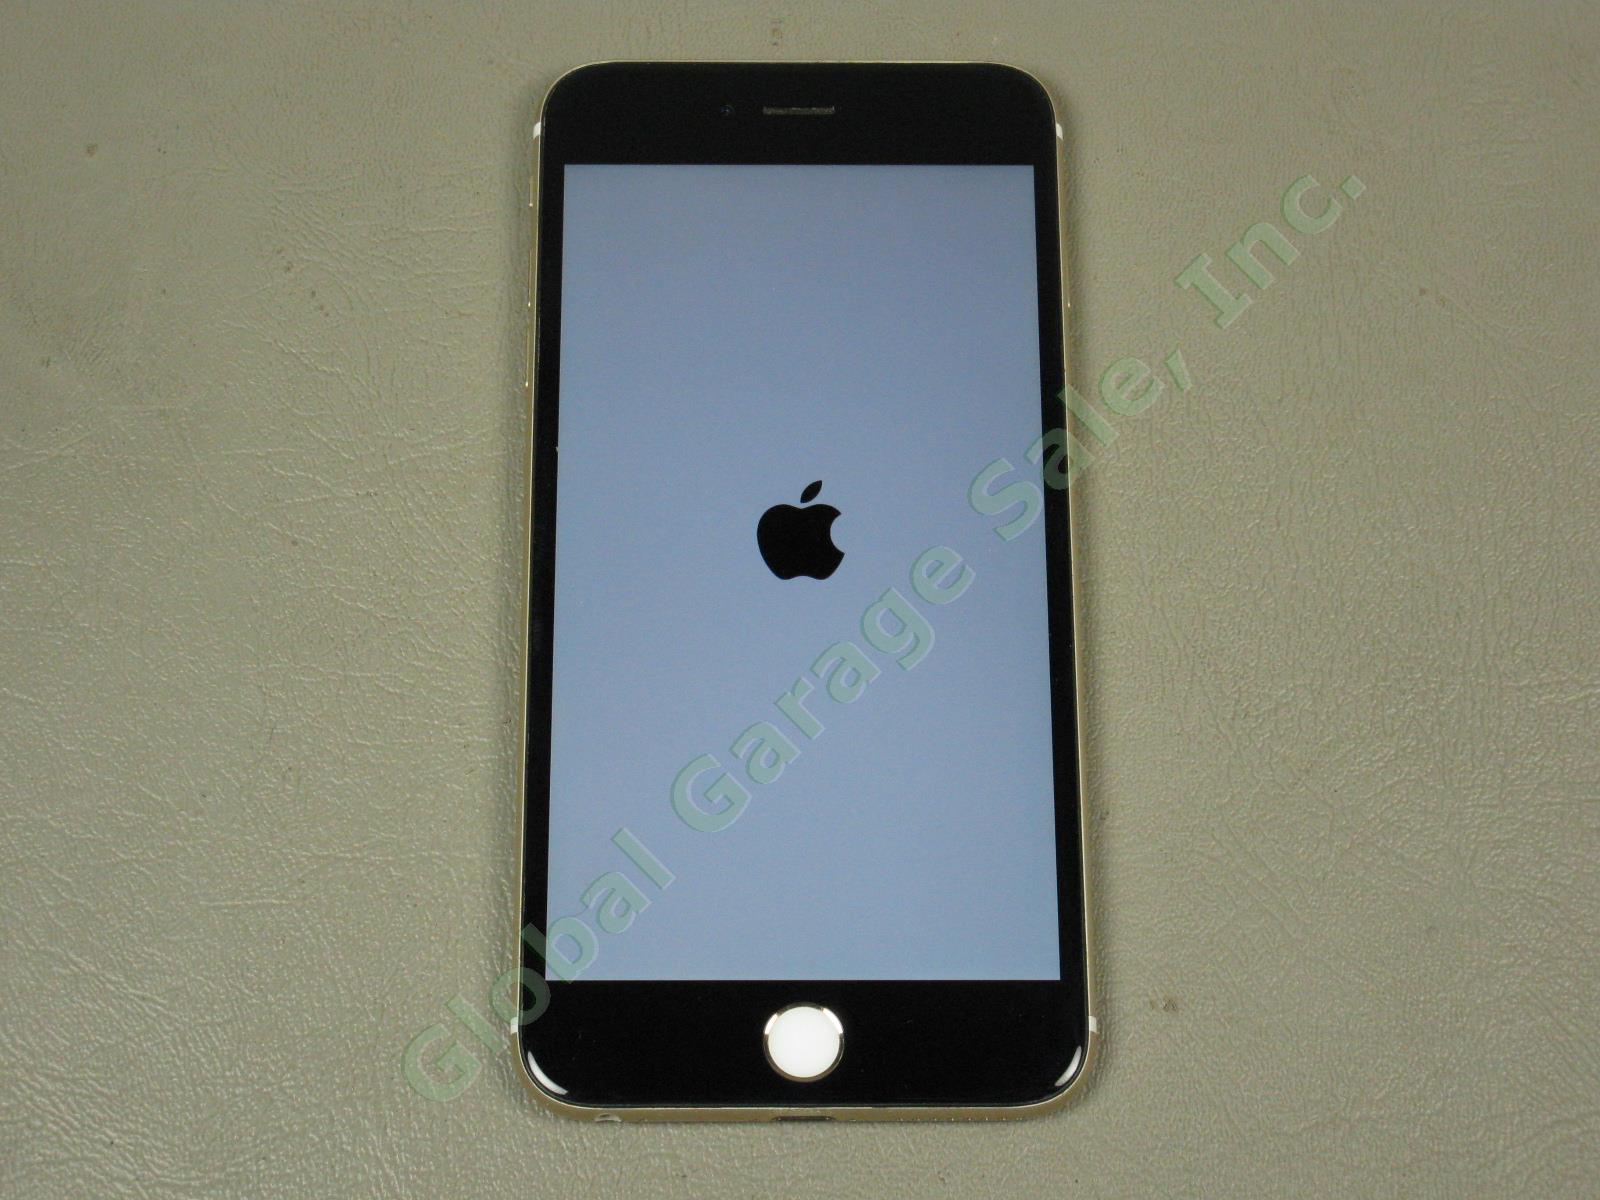 Apple iPhone 6 Plus Black 128GB A1522 MGCQ2LL/A Verizon Works Great No Reserve!